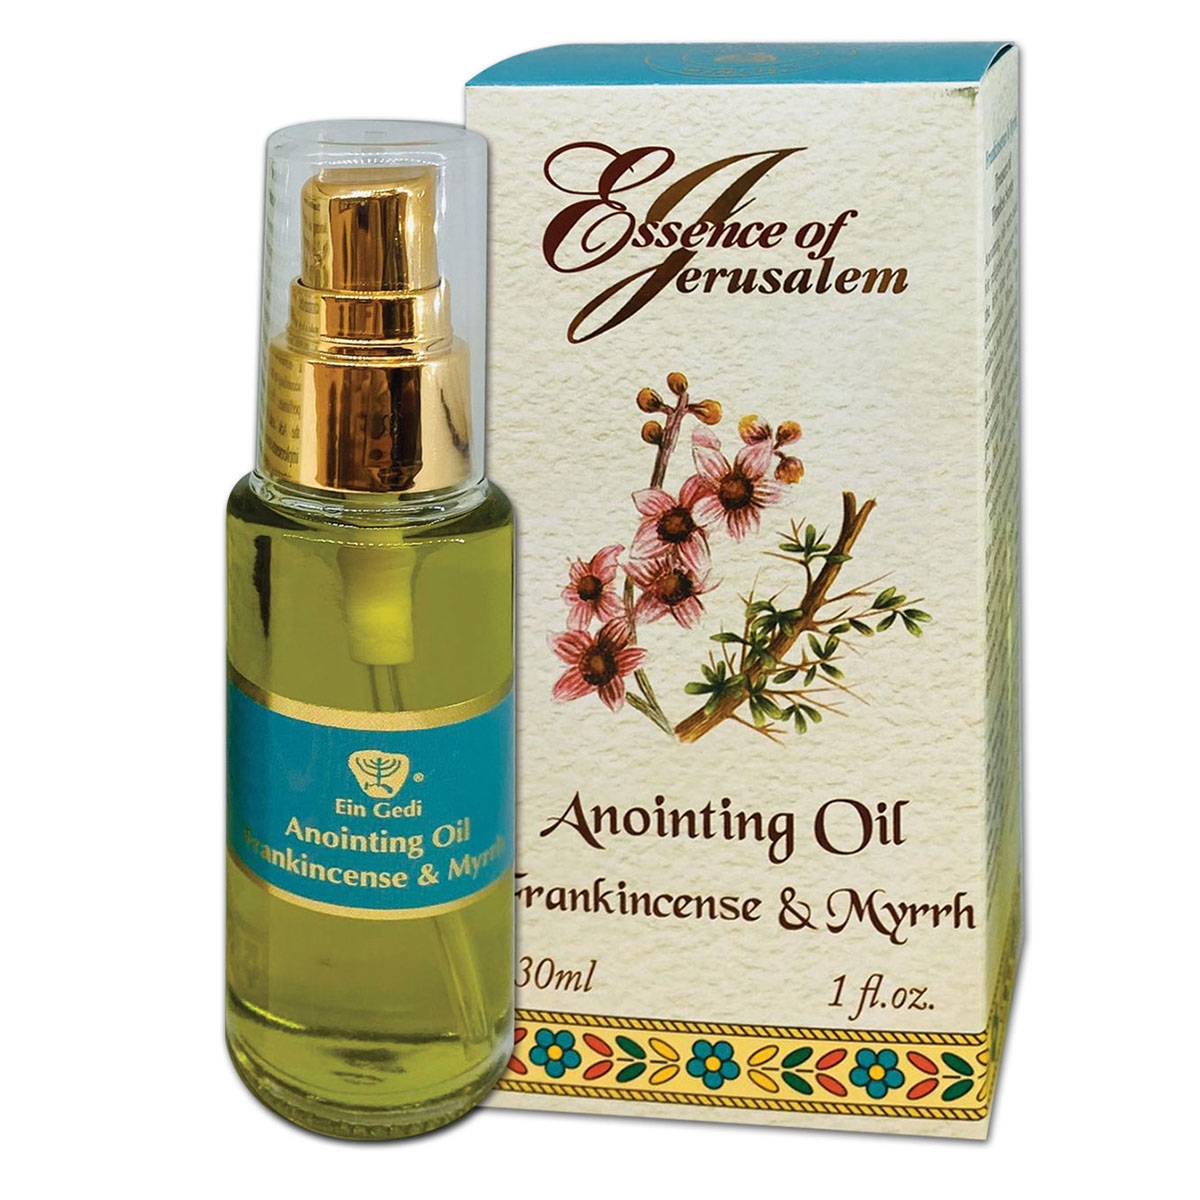 Ein Gedi Essence of Jerusalem Anointing Oil – Frankincense & Myrrh (30 ml) - 1